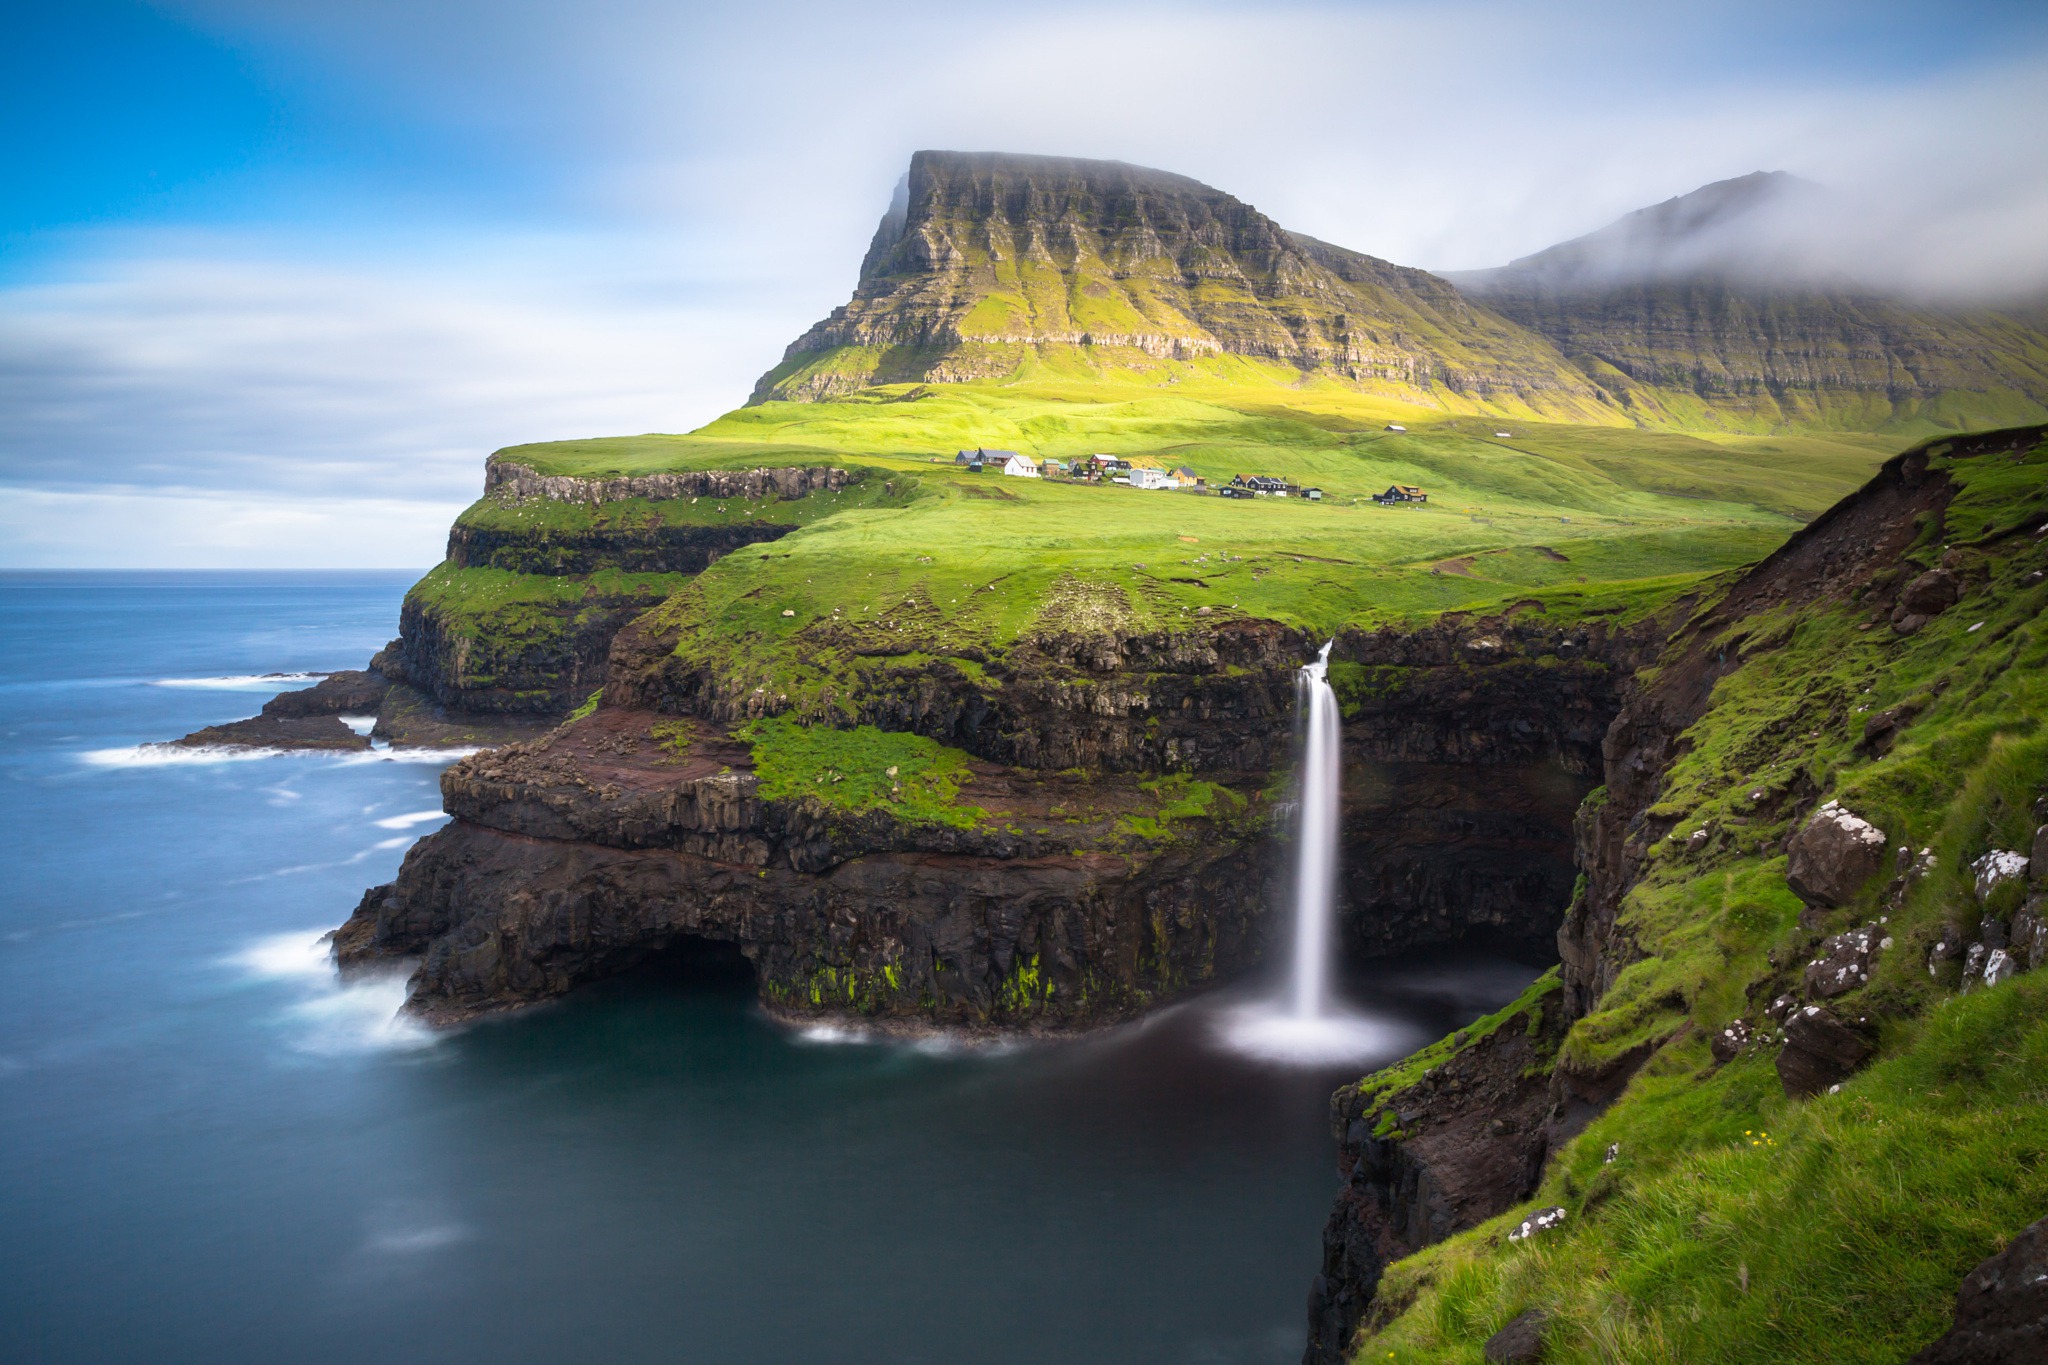 General 2048x1365 coast nature cliff sea landscape waterfall Faroe Islands rocks village